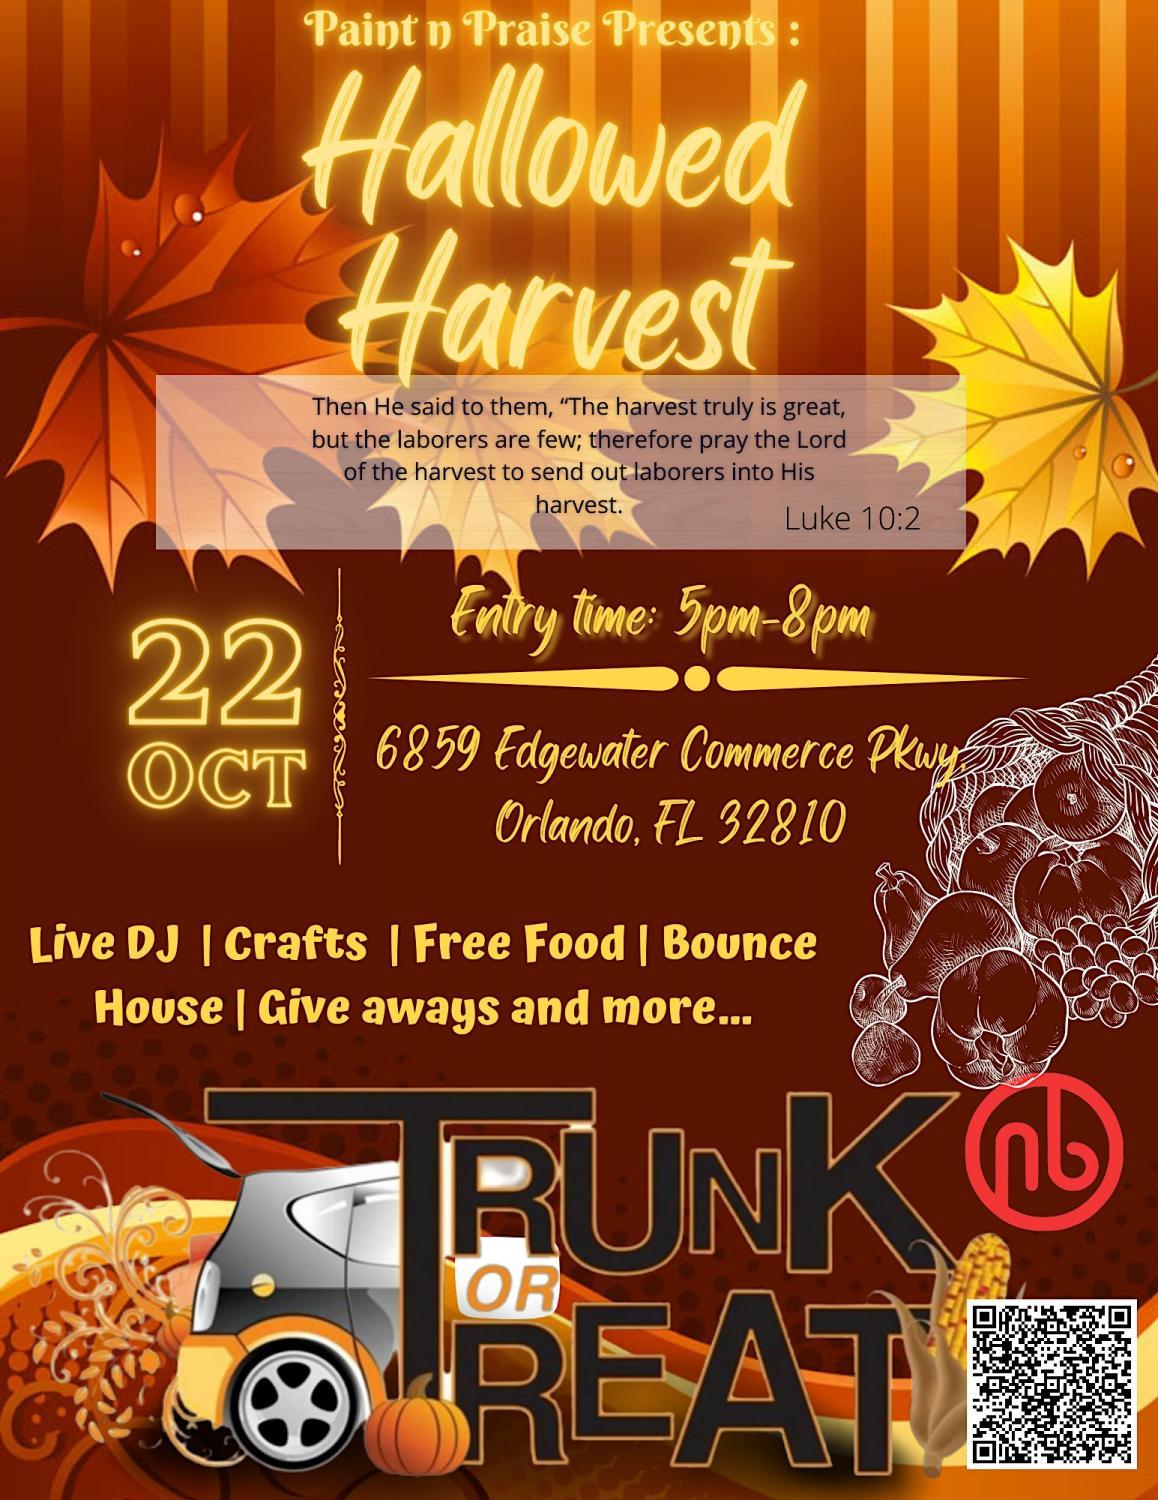 Hallowed Harvest
Sat Oct 22, 5:00 PM - Sat Oct 22, 8:00 PM
in 2 days